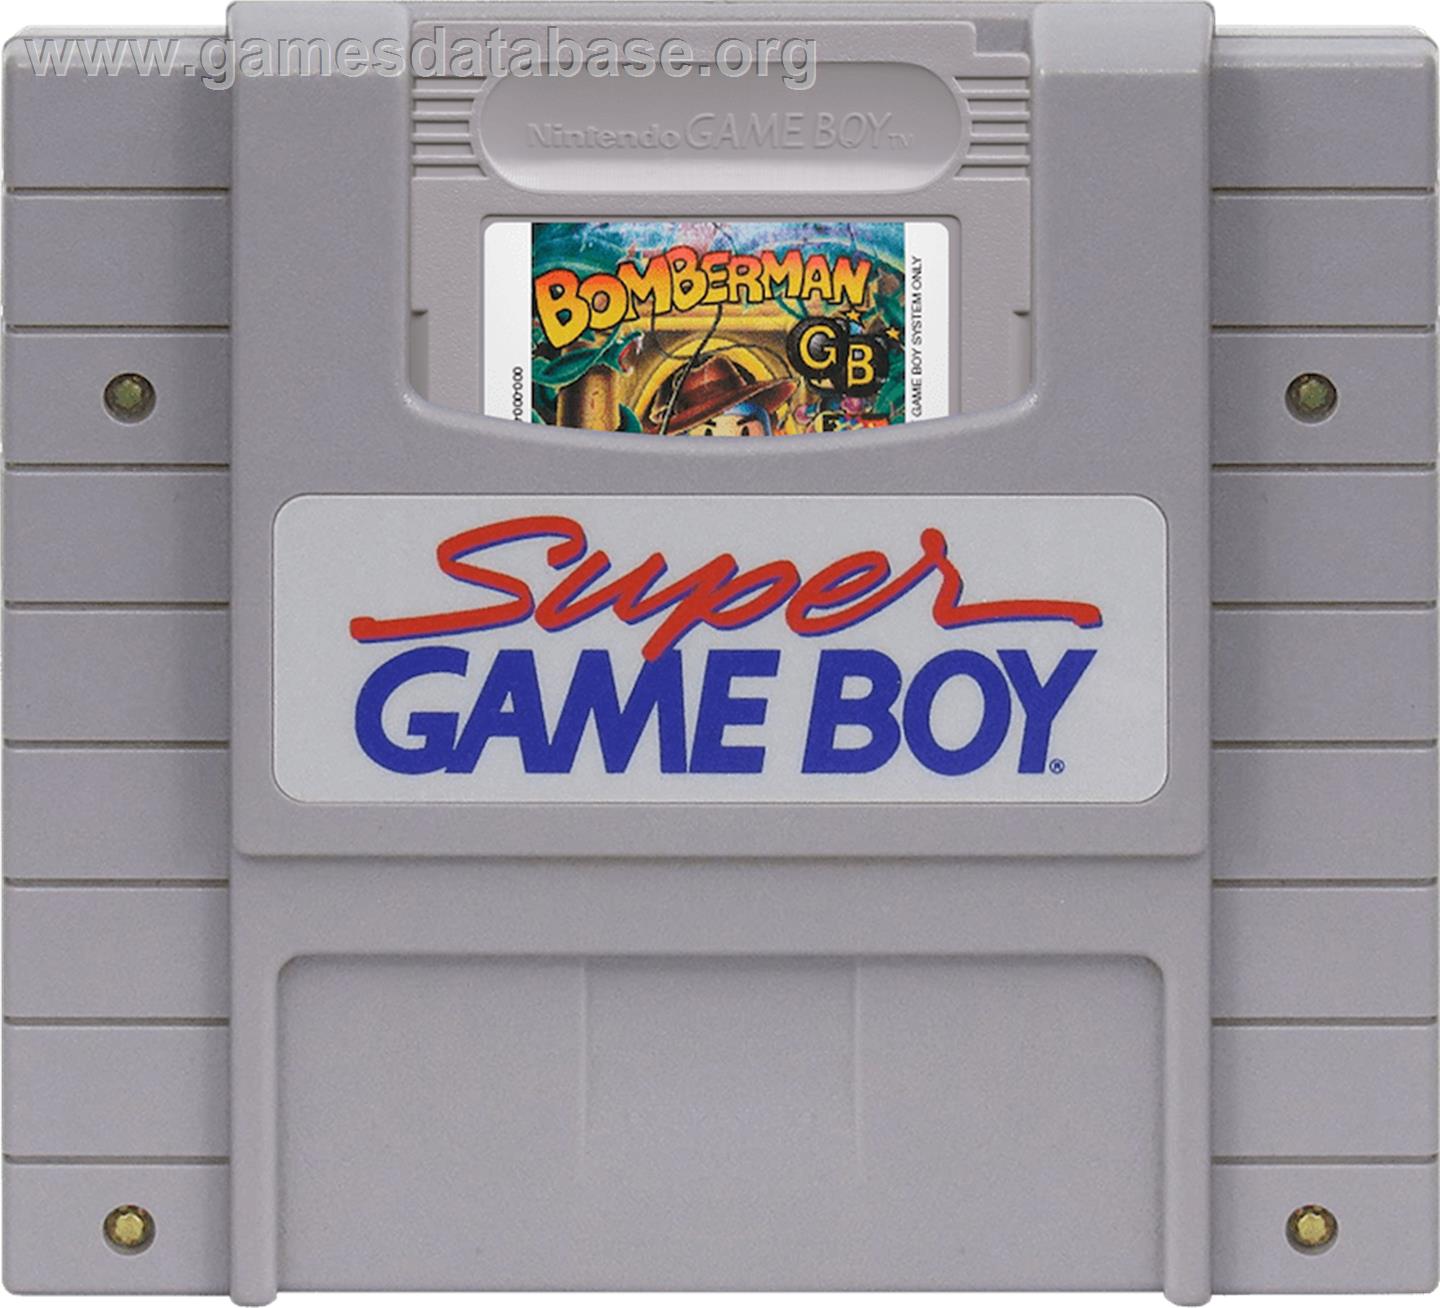 Bomberman GB - Nintendo Super Gameboy - Artwork - Cartridge